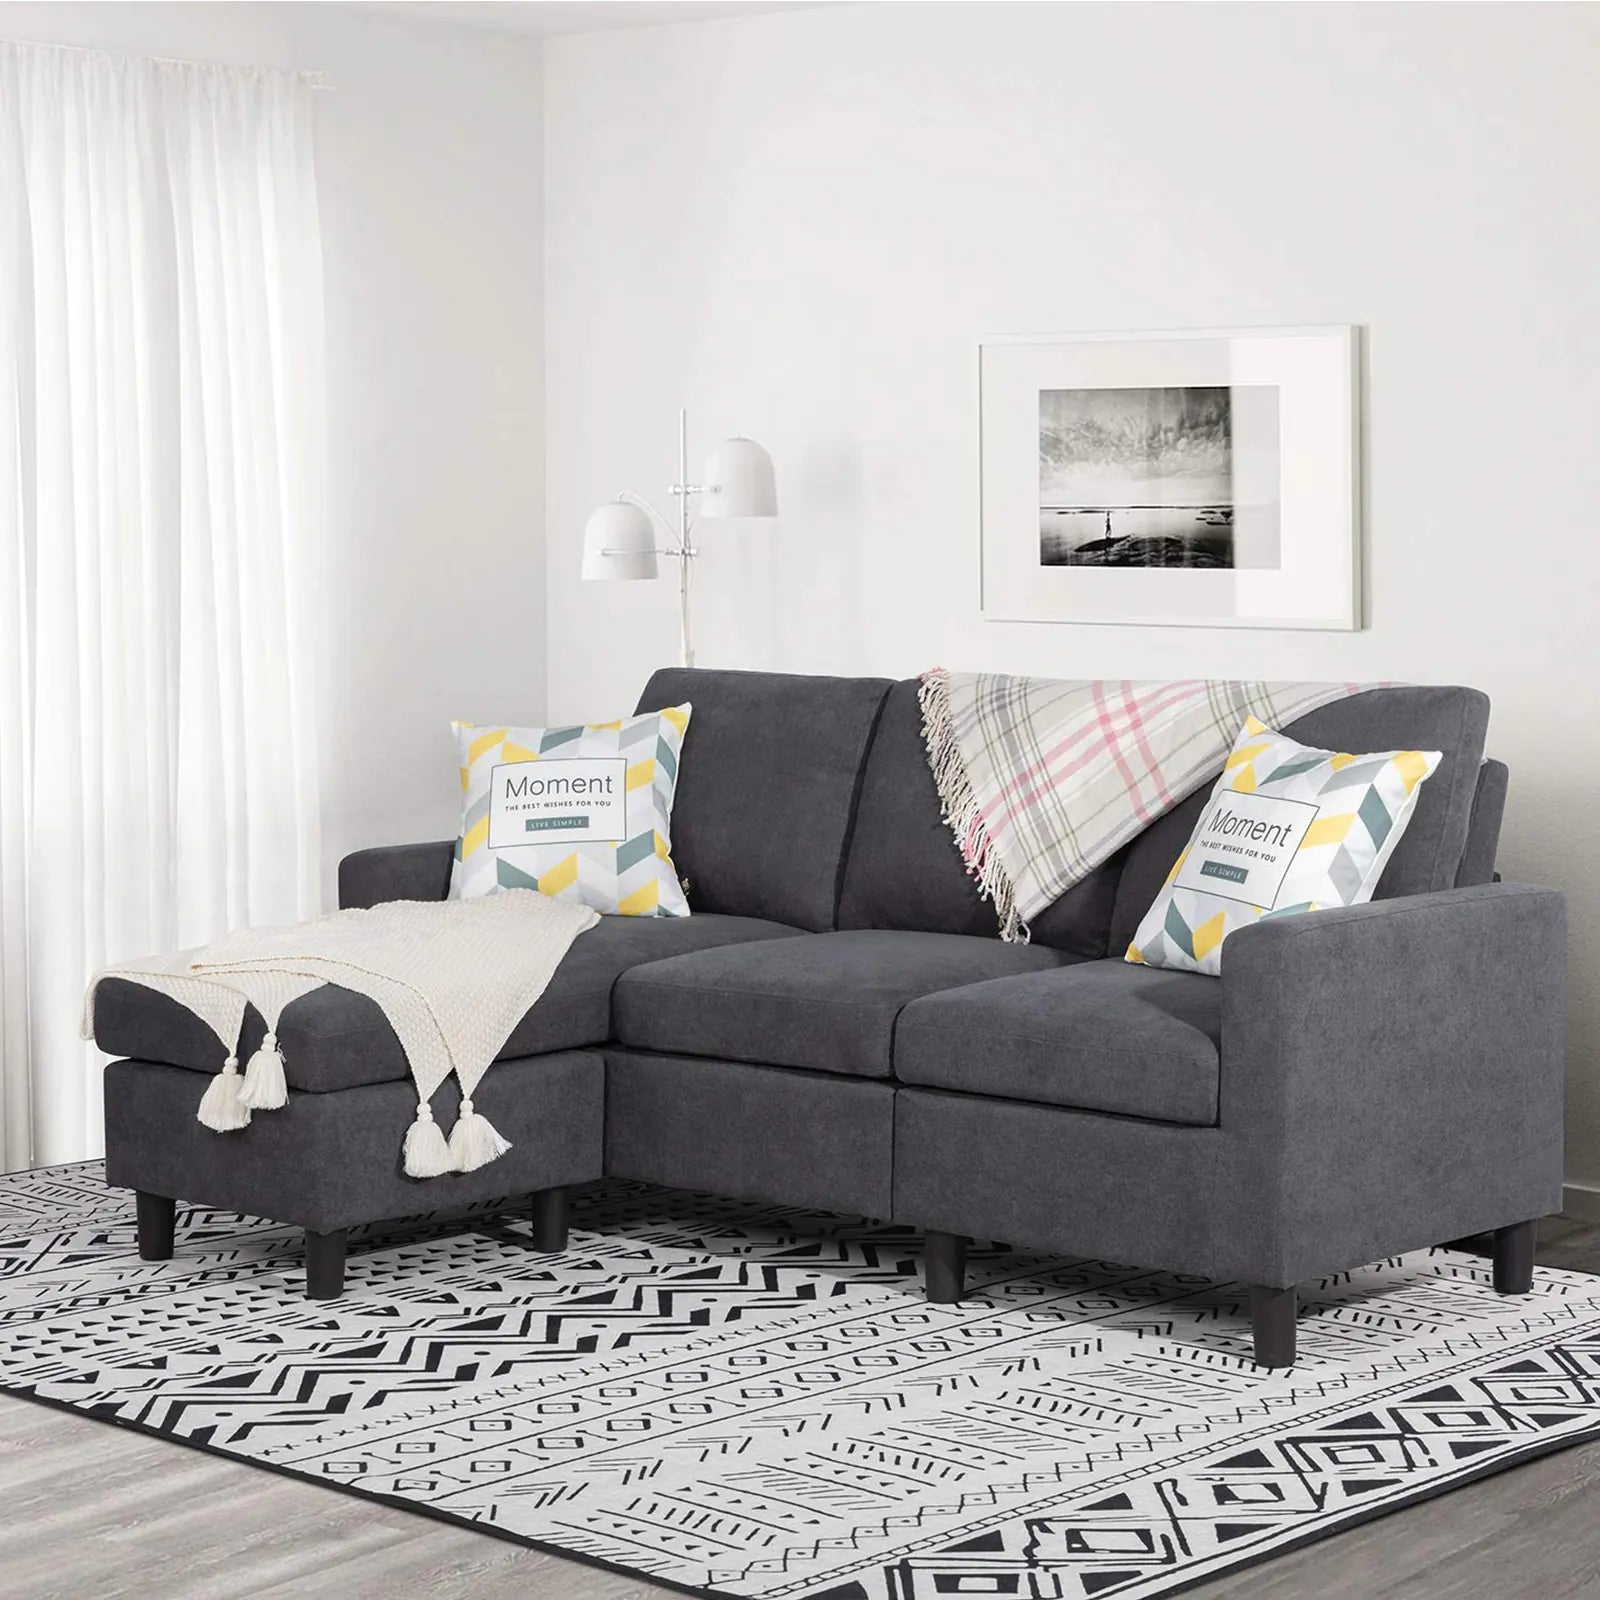 Sofá seccional moderno de 3 asientos en forma de L de tela de lino con chaise reversible